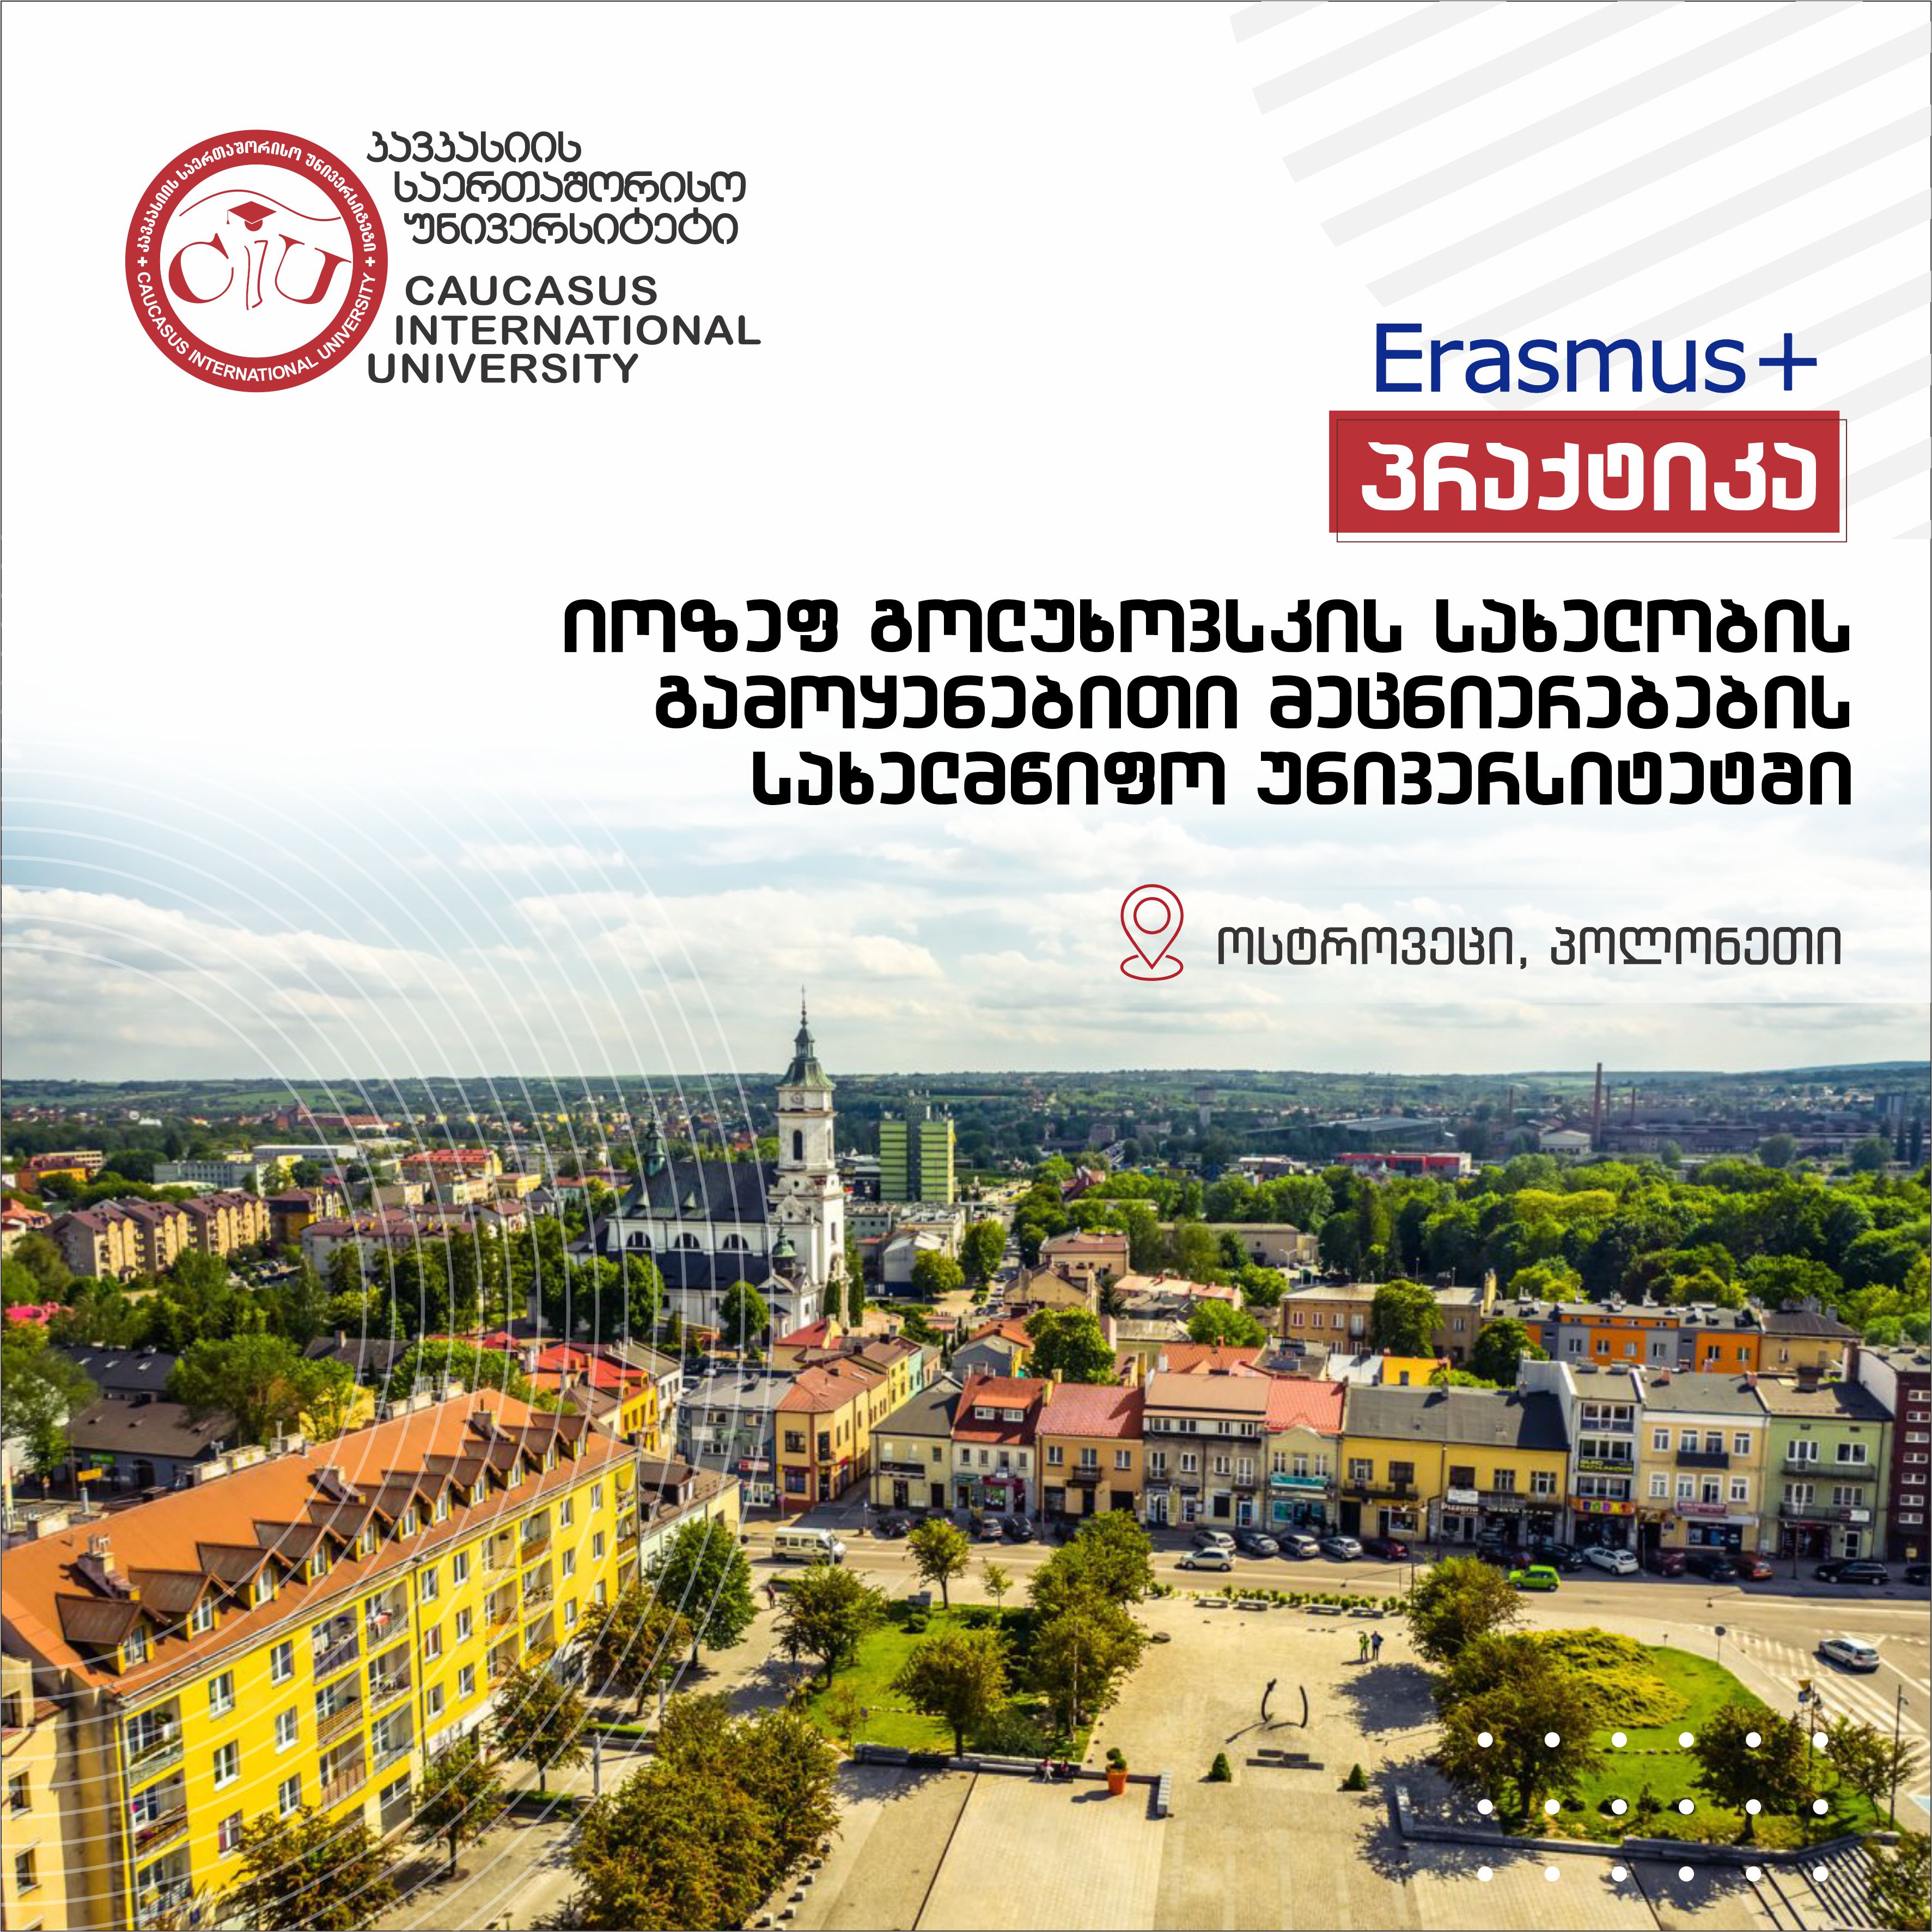 Erasmus+ პრაქტიკა იოზეფ გოლუხოვსკის სახელობის გამოყენებითი მეცნიერებების სახელმწიფო უნივერსიტეტში. (ოსტროვეცი, პოლონეთი.)